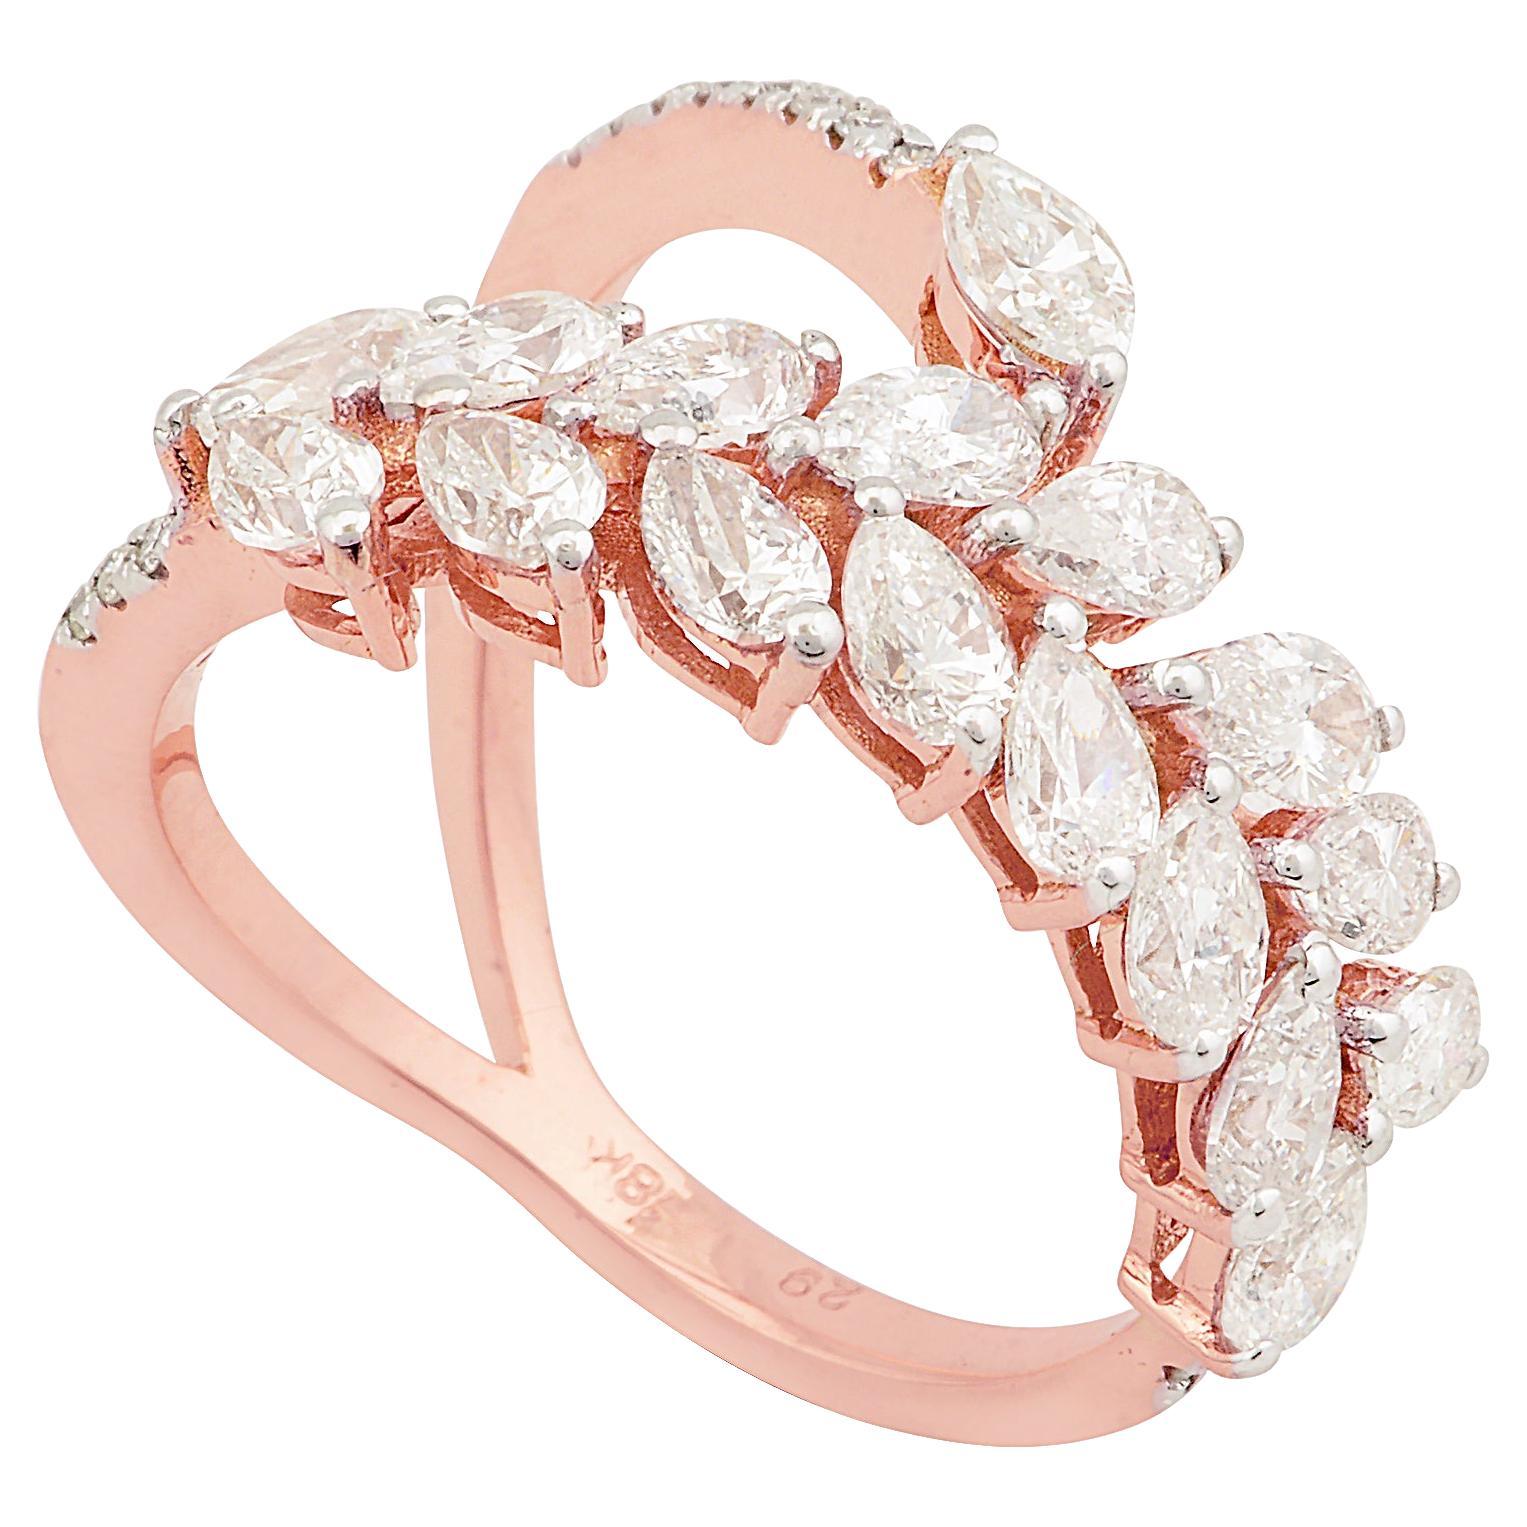 2 Ct. SI Clarity HI Color Pear Marquise Diamond Designer Ring 18 Karat Rose Gold